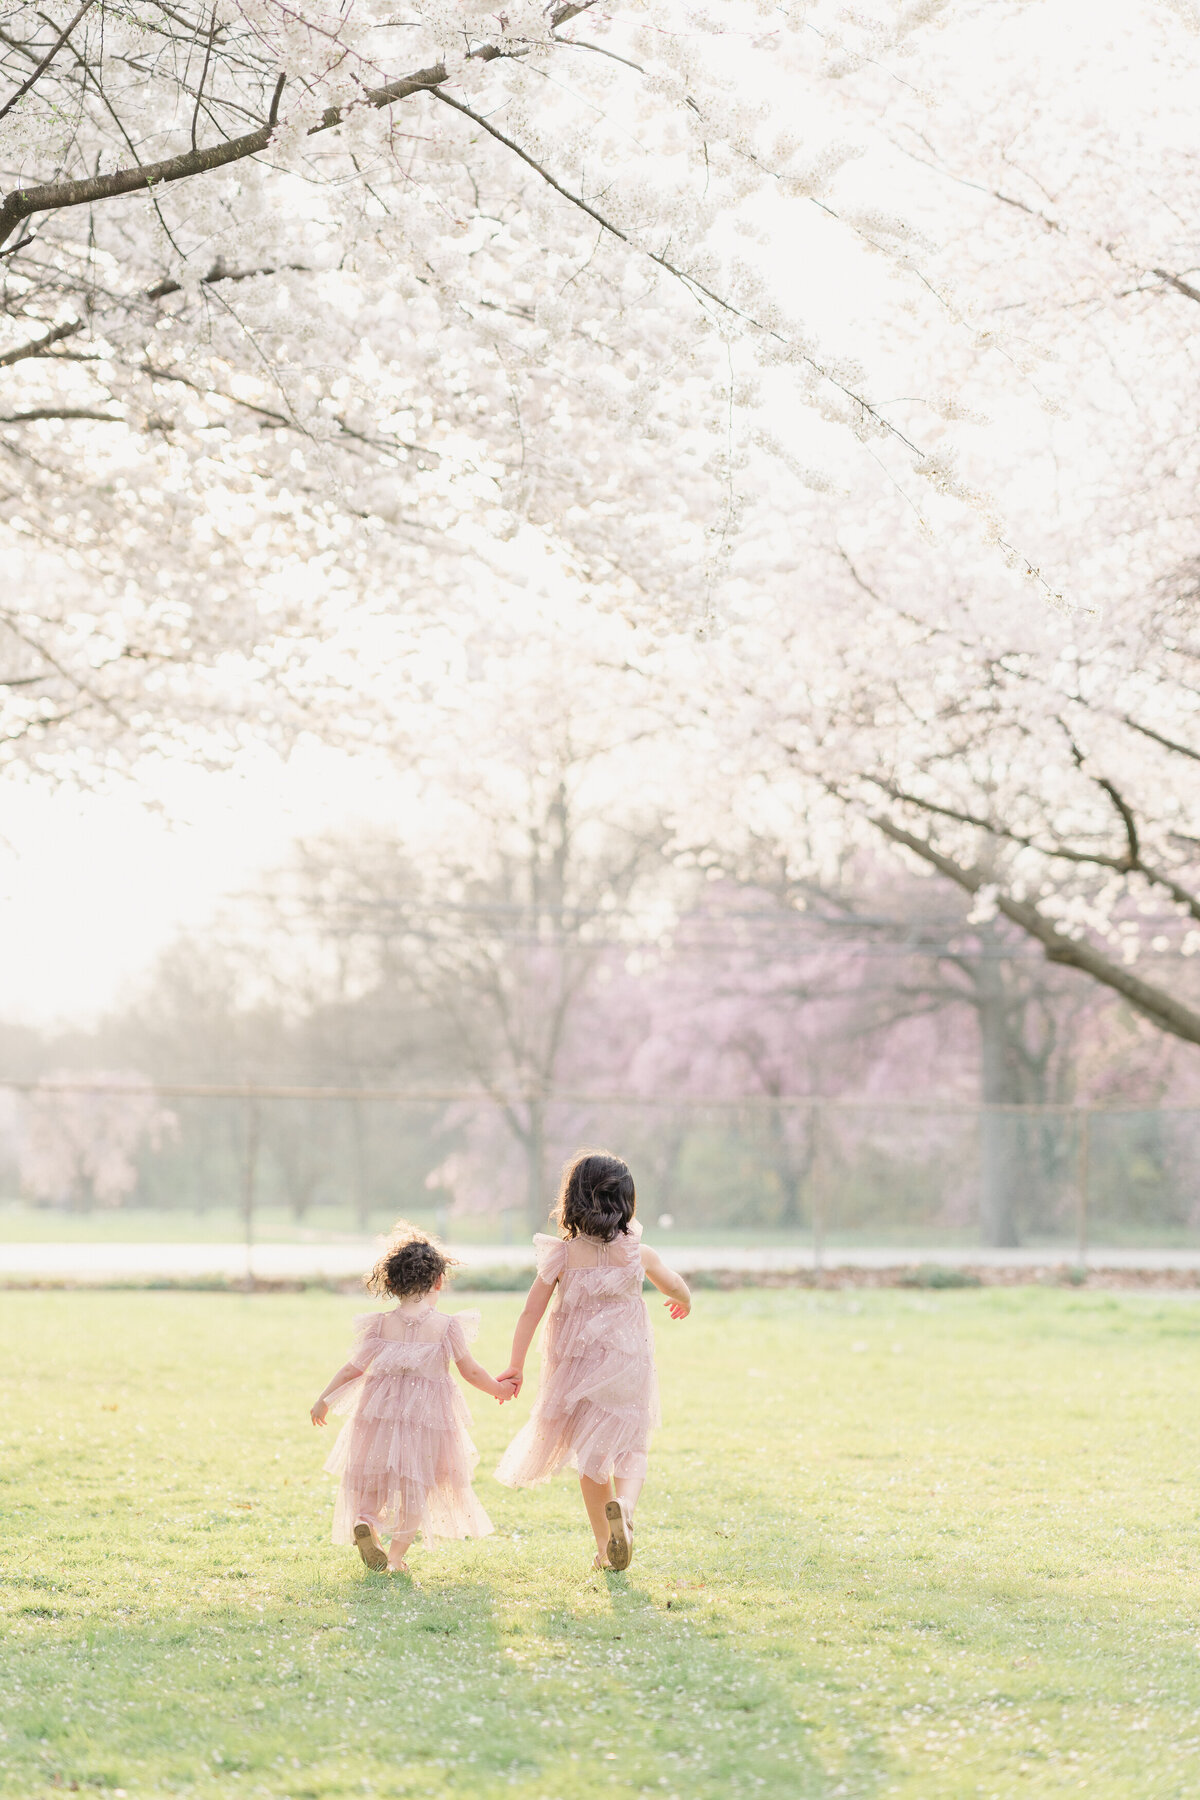 Courtney-Landrum-Photography-Motherhood-Cherry-Blossoms-11